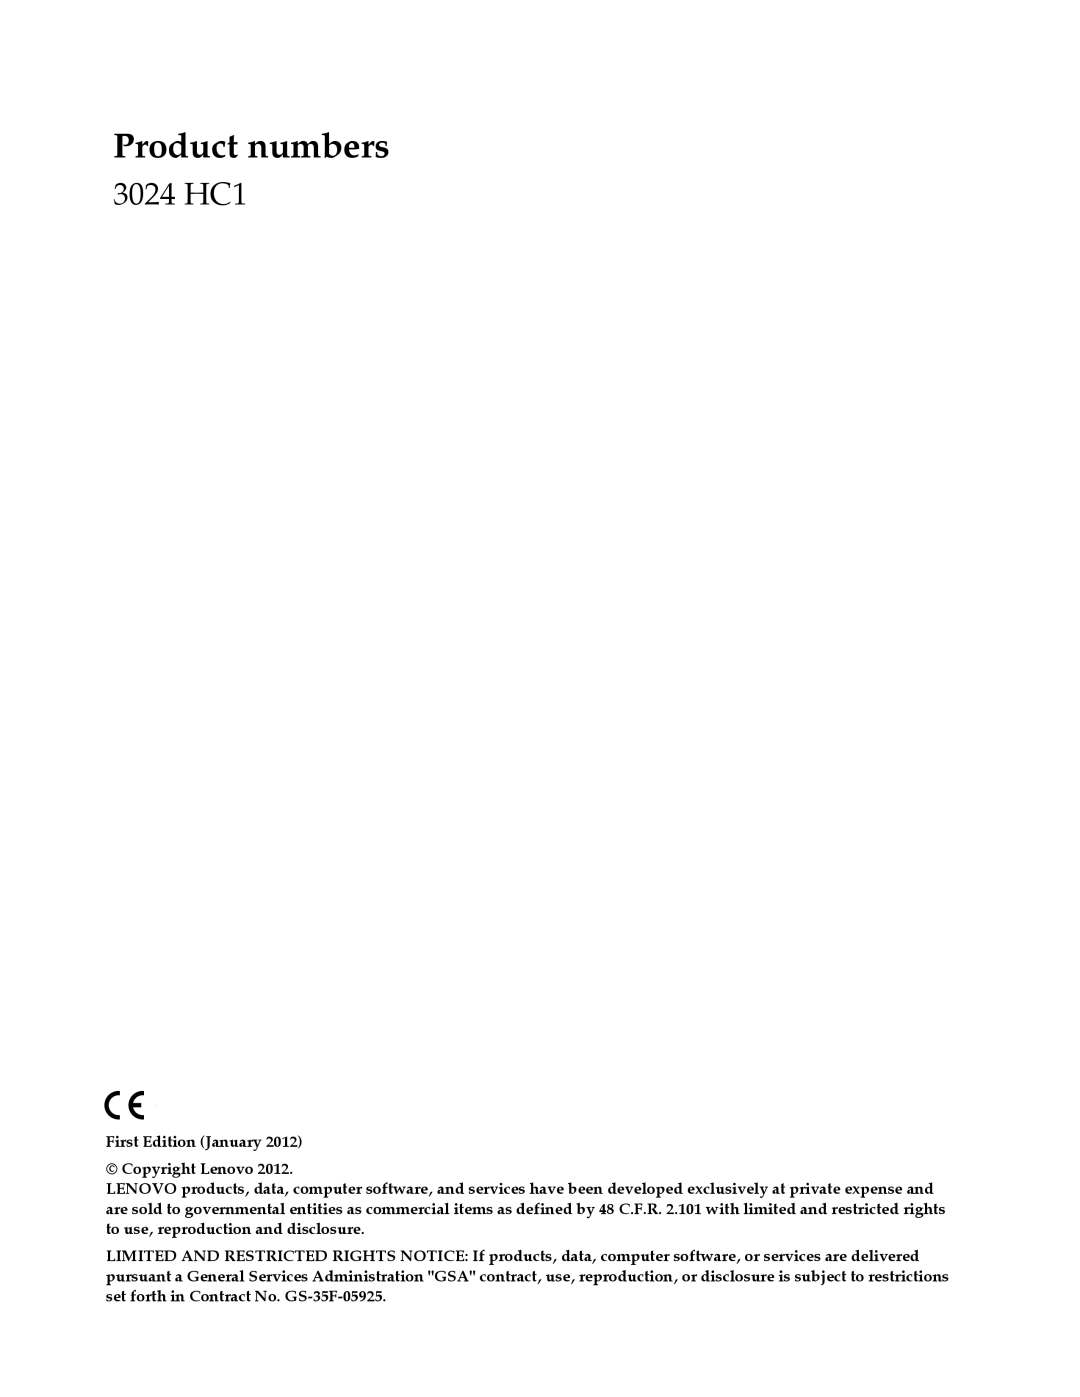 Lenovo 3024HC1 manual 3024 HC1, Product numbers 